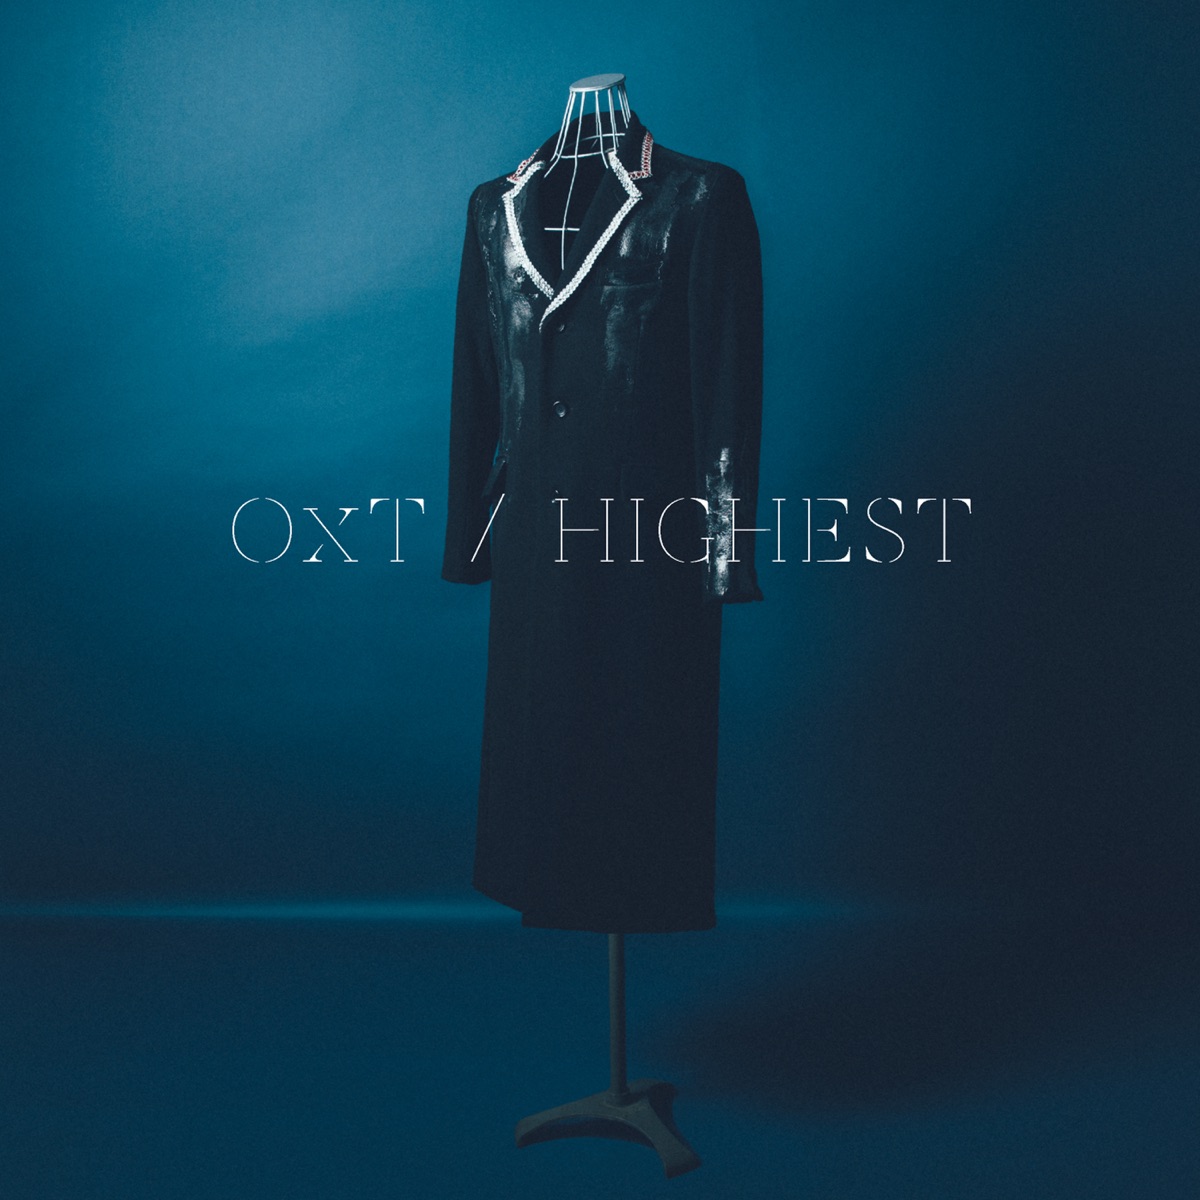 『OxT - HIGHEST』収録の『HIGHEST』ジャケット